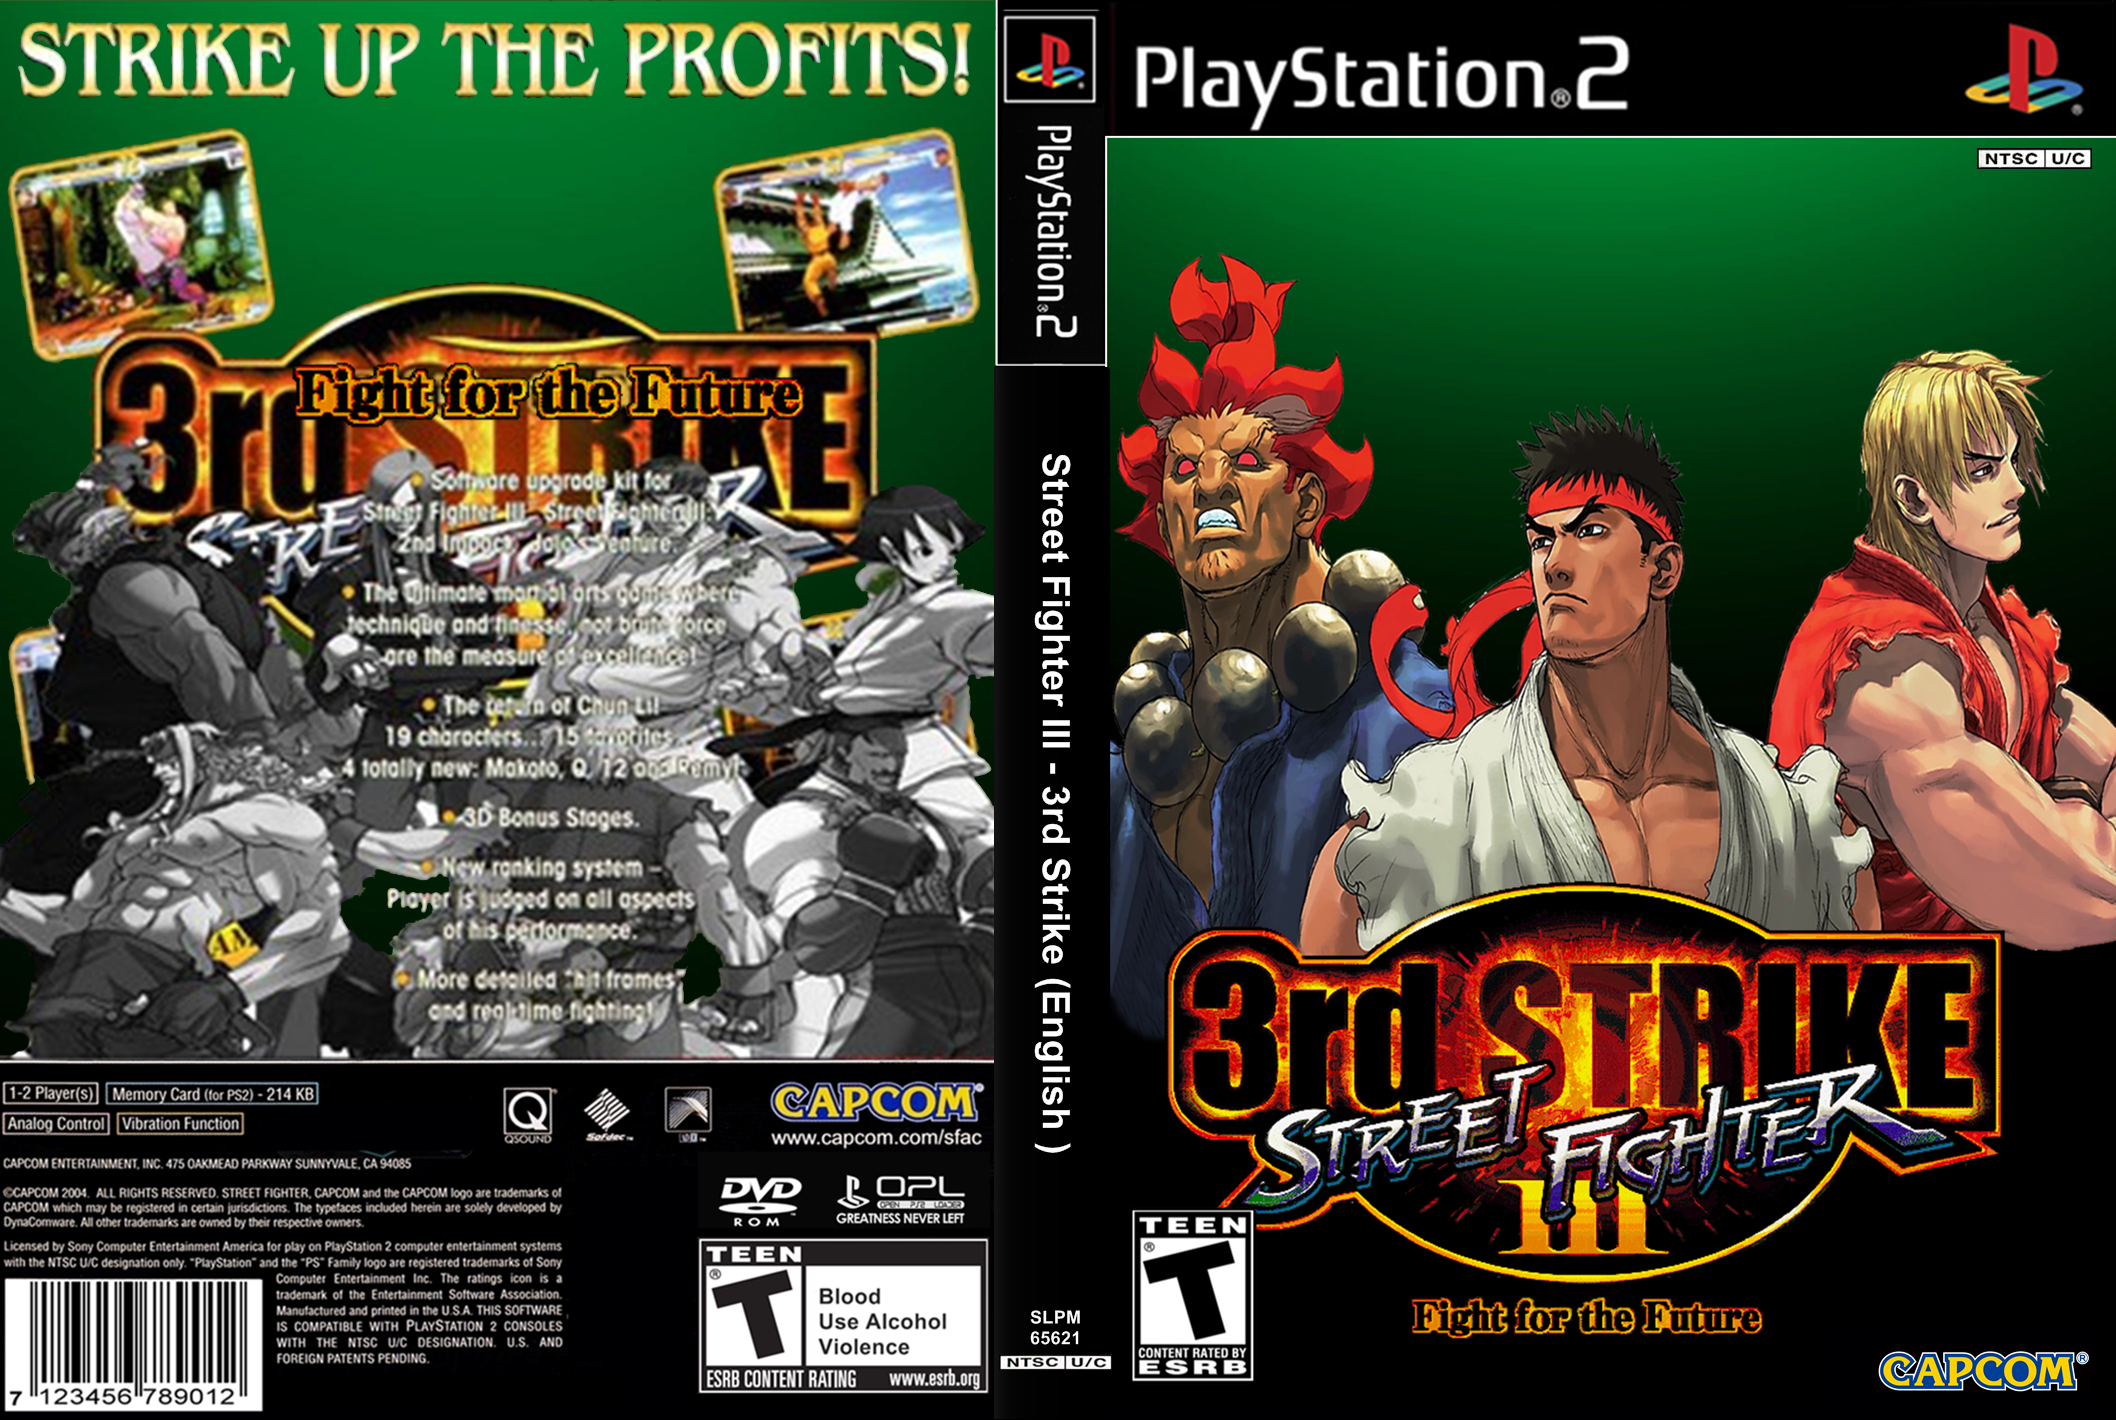 Revivendo a Nostalgia Do PS2: Grand Theft Auto III (GTA 3 PT-BR) DVD ISO PS2